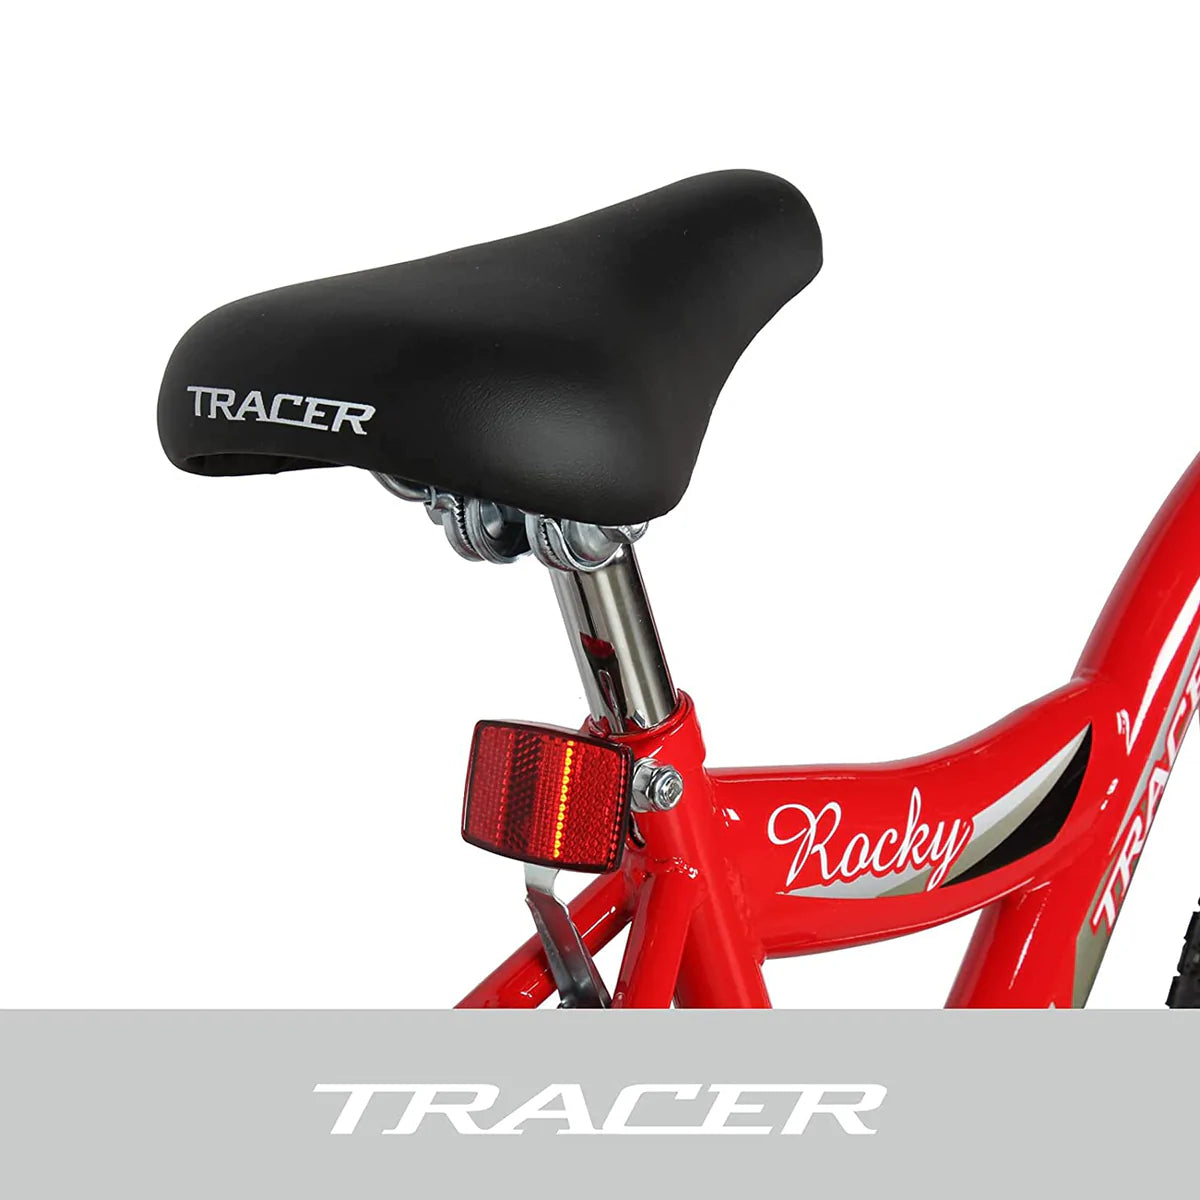 Tracer Rocky 16 Inch Kids Bike - Red | Kids Bike | Logan | Kid's BMX Bikes | Freestyle BMX Bikes | BMX Bike | Tracer Bike | Bike Lover USA